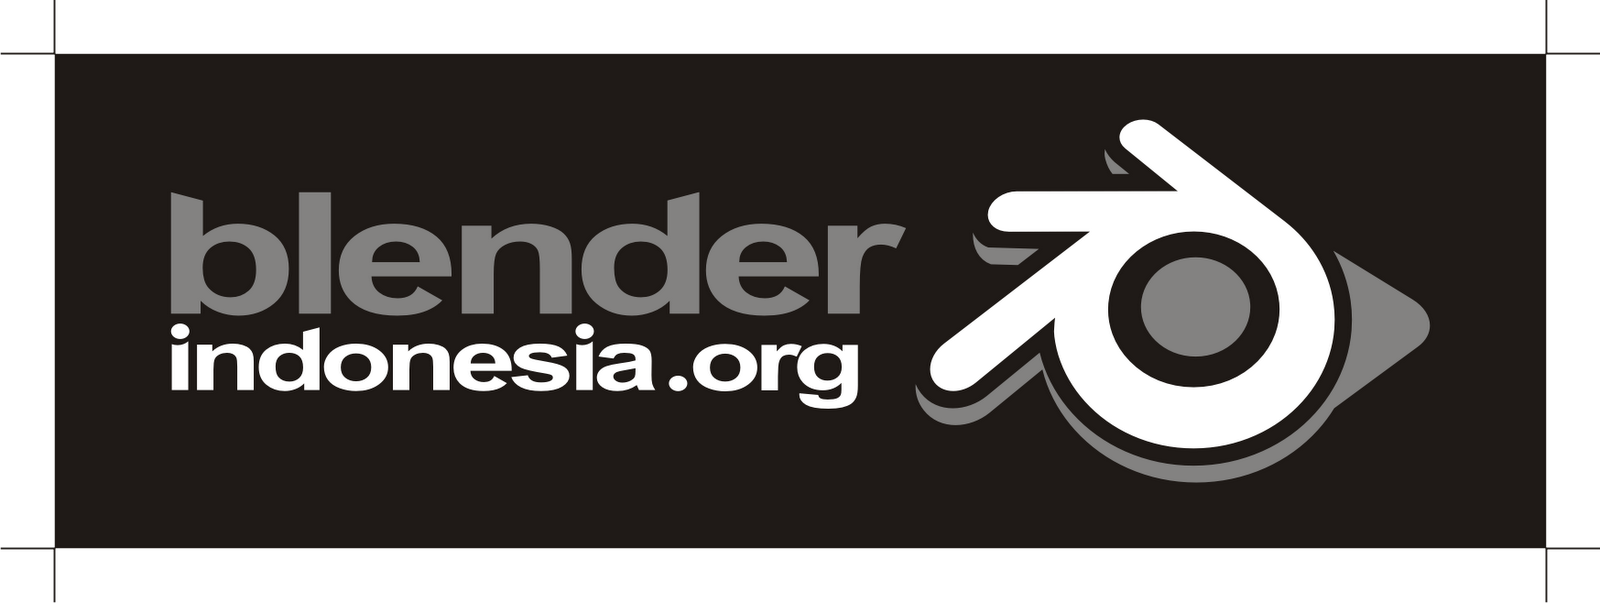 [CLOSED] Donasi + Merchandise Blender Indonesia 5